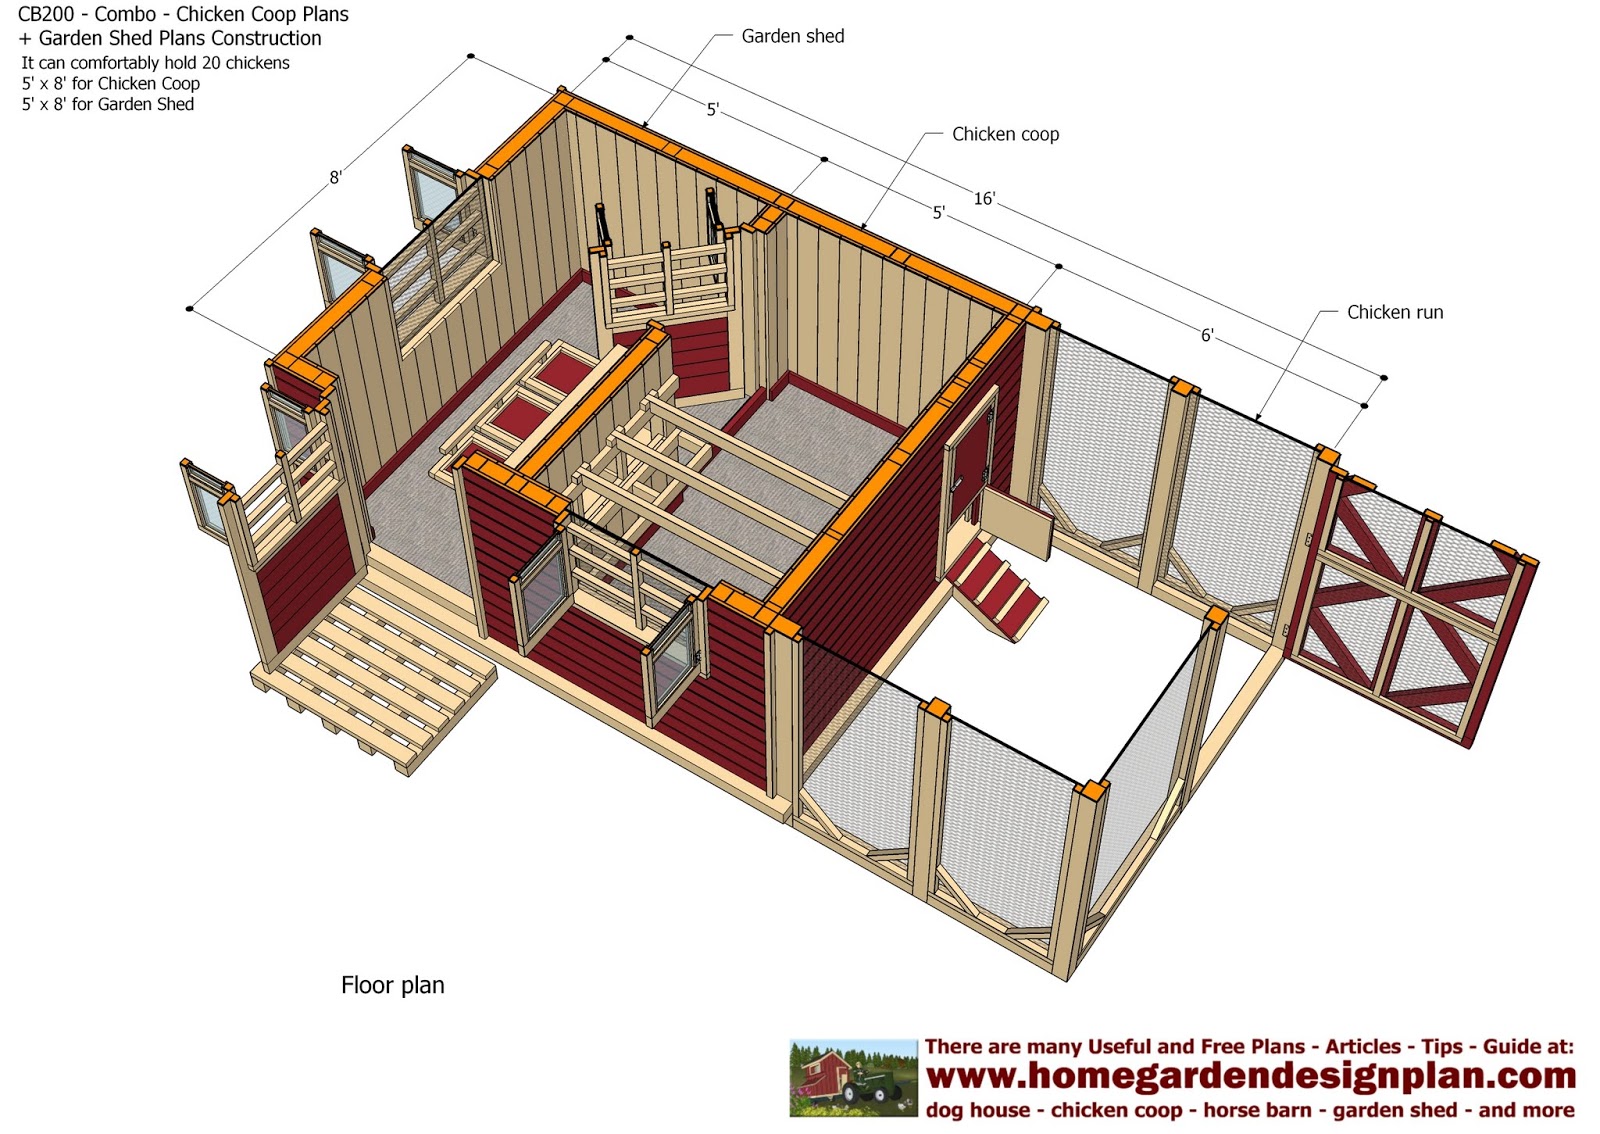 home garden plans: CB200 - Combo Plans - Chicken Coop ...